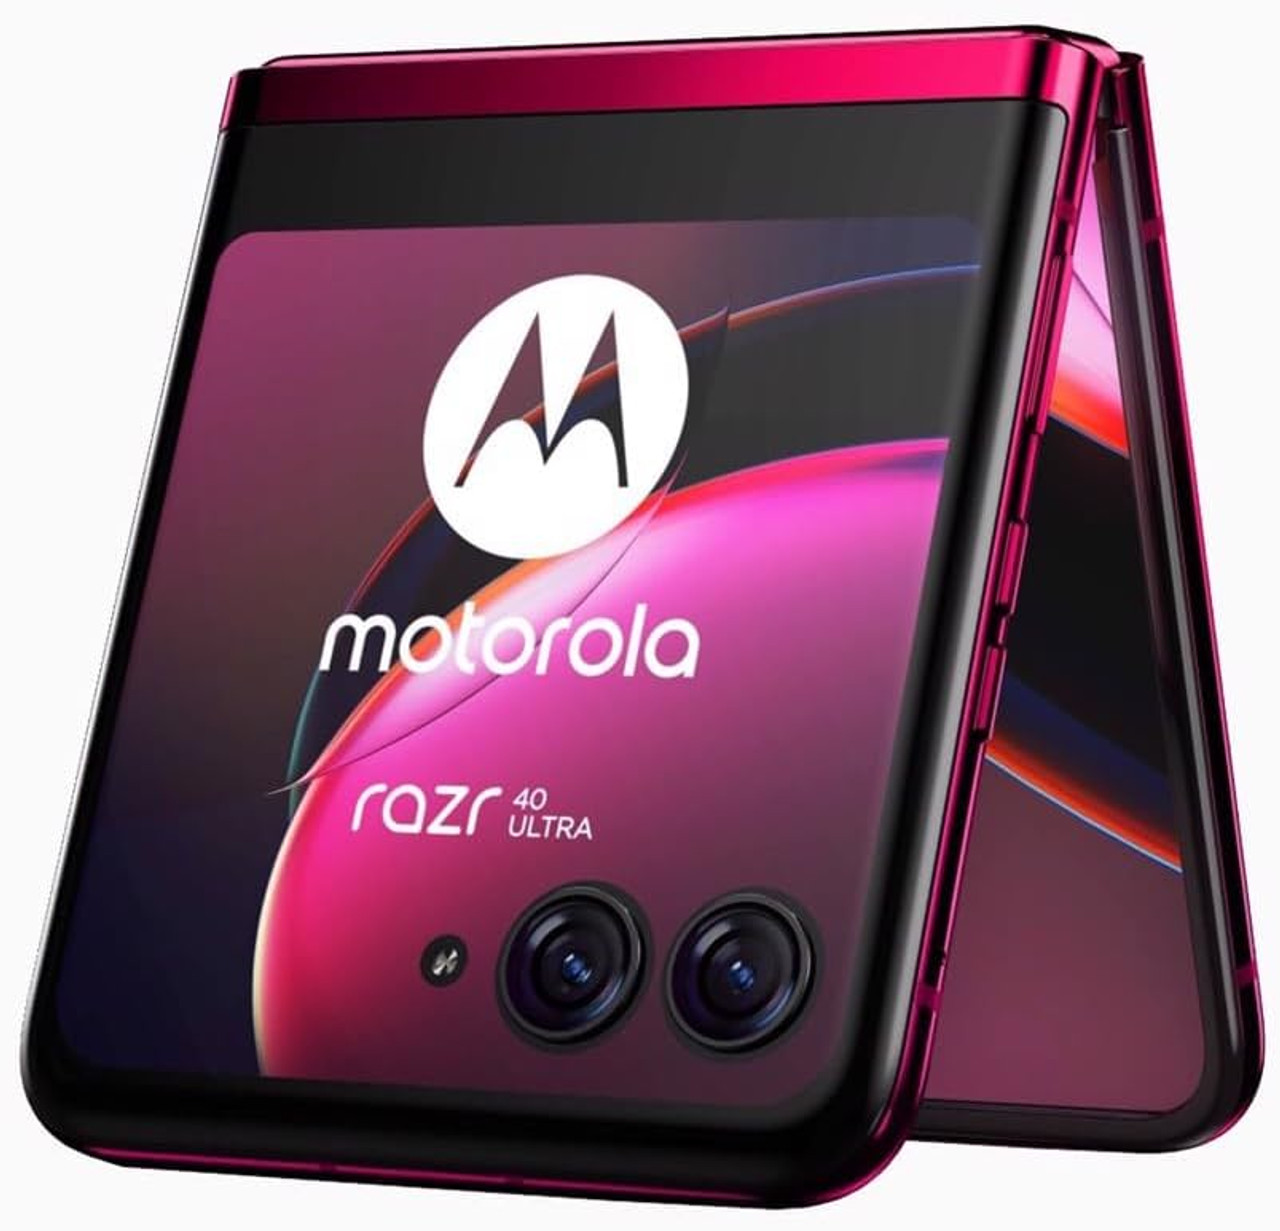 Motorola razr 40 Ultra-Factory Unlocked-3.6 External AMOLED Display-Flip  Phone